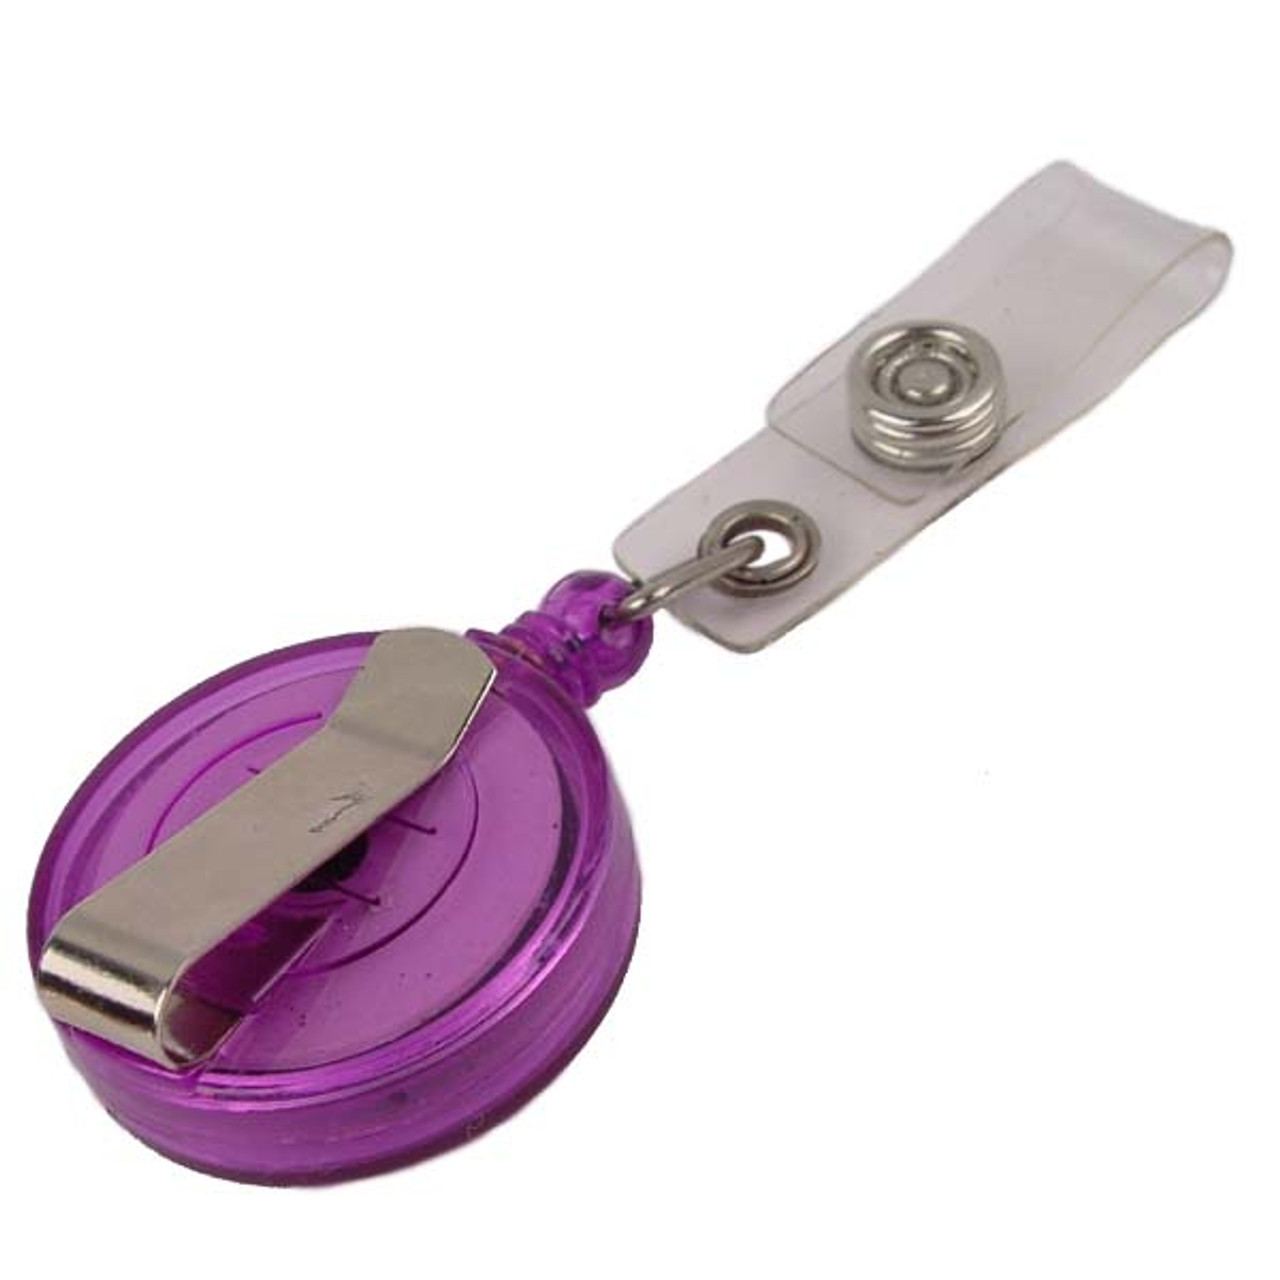 https://cdn11.bigcommerce.com/s-k4as3uan8i/images/stencil/1280x1280/products/845/3851/14182-Badge-Holder-Retractor-Pocket-Bulk-Pack-Purple-Clip__70361.1604351775.jpg?c=1